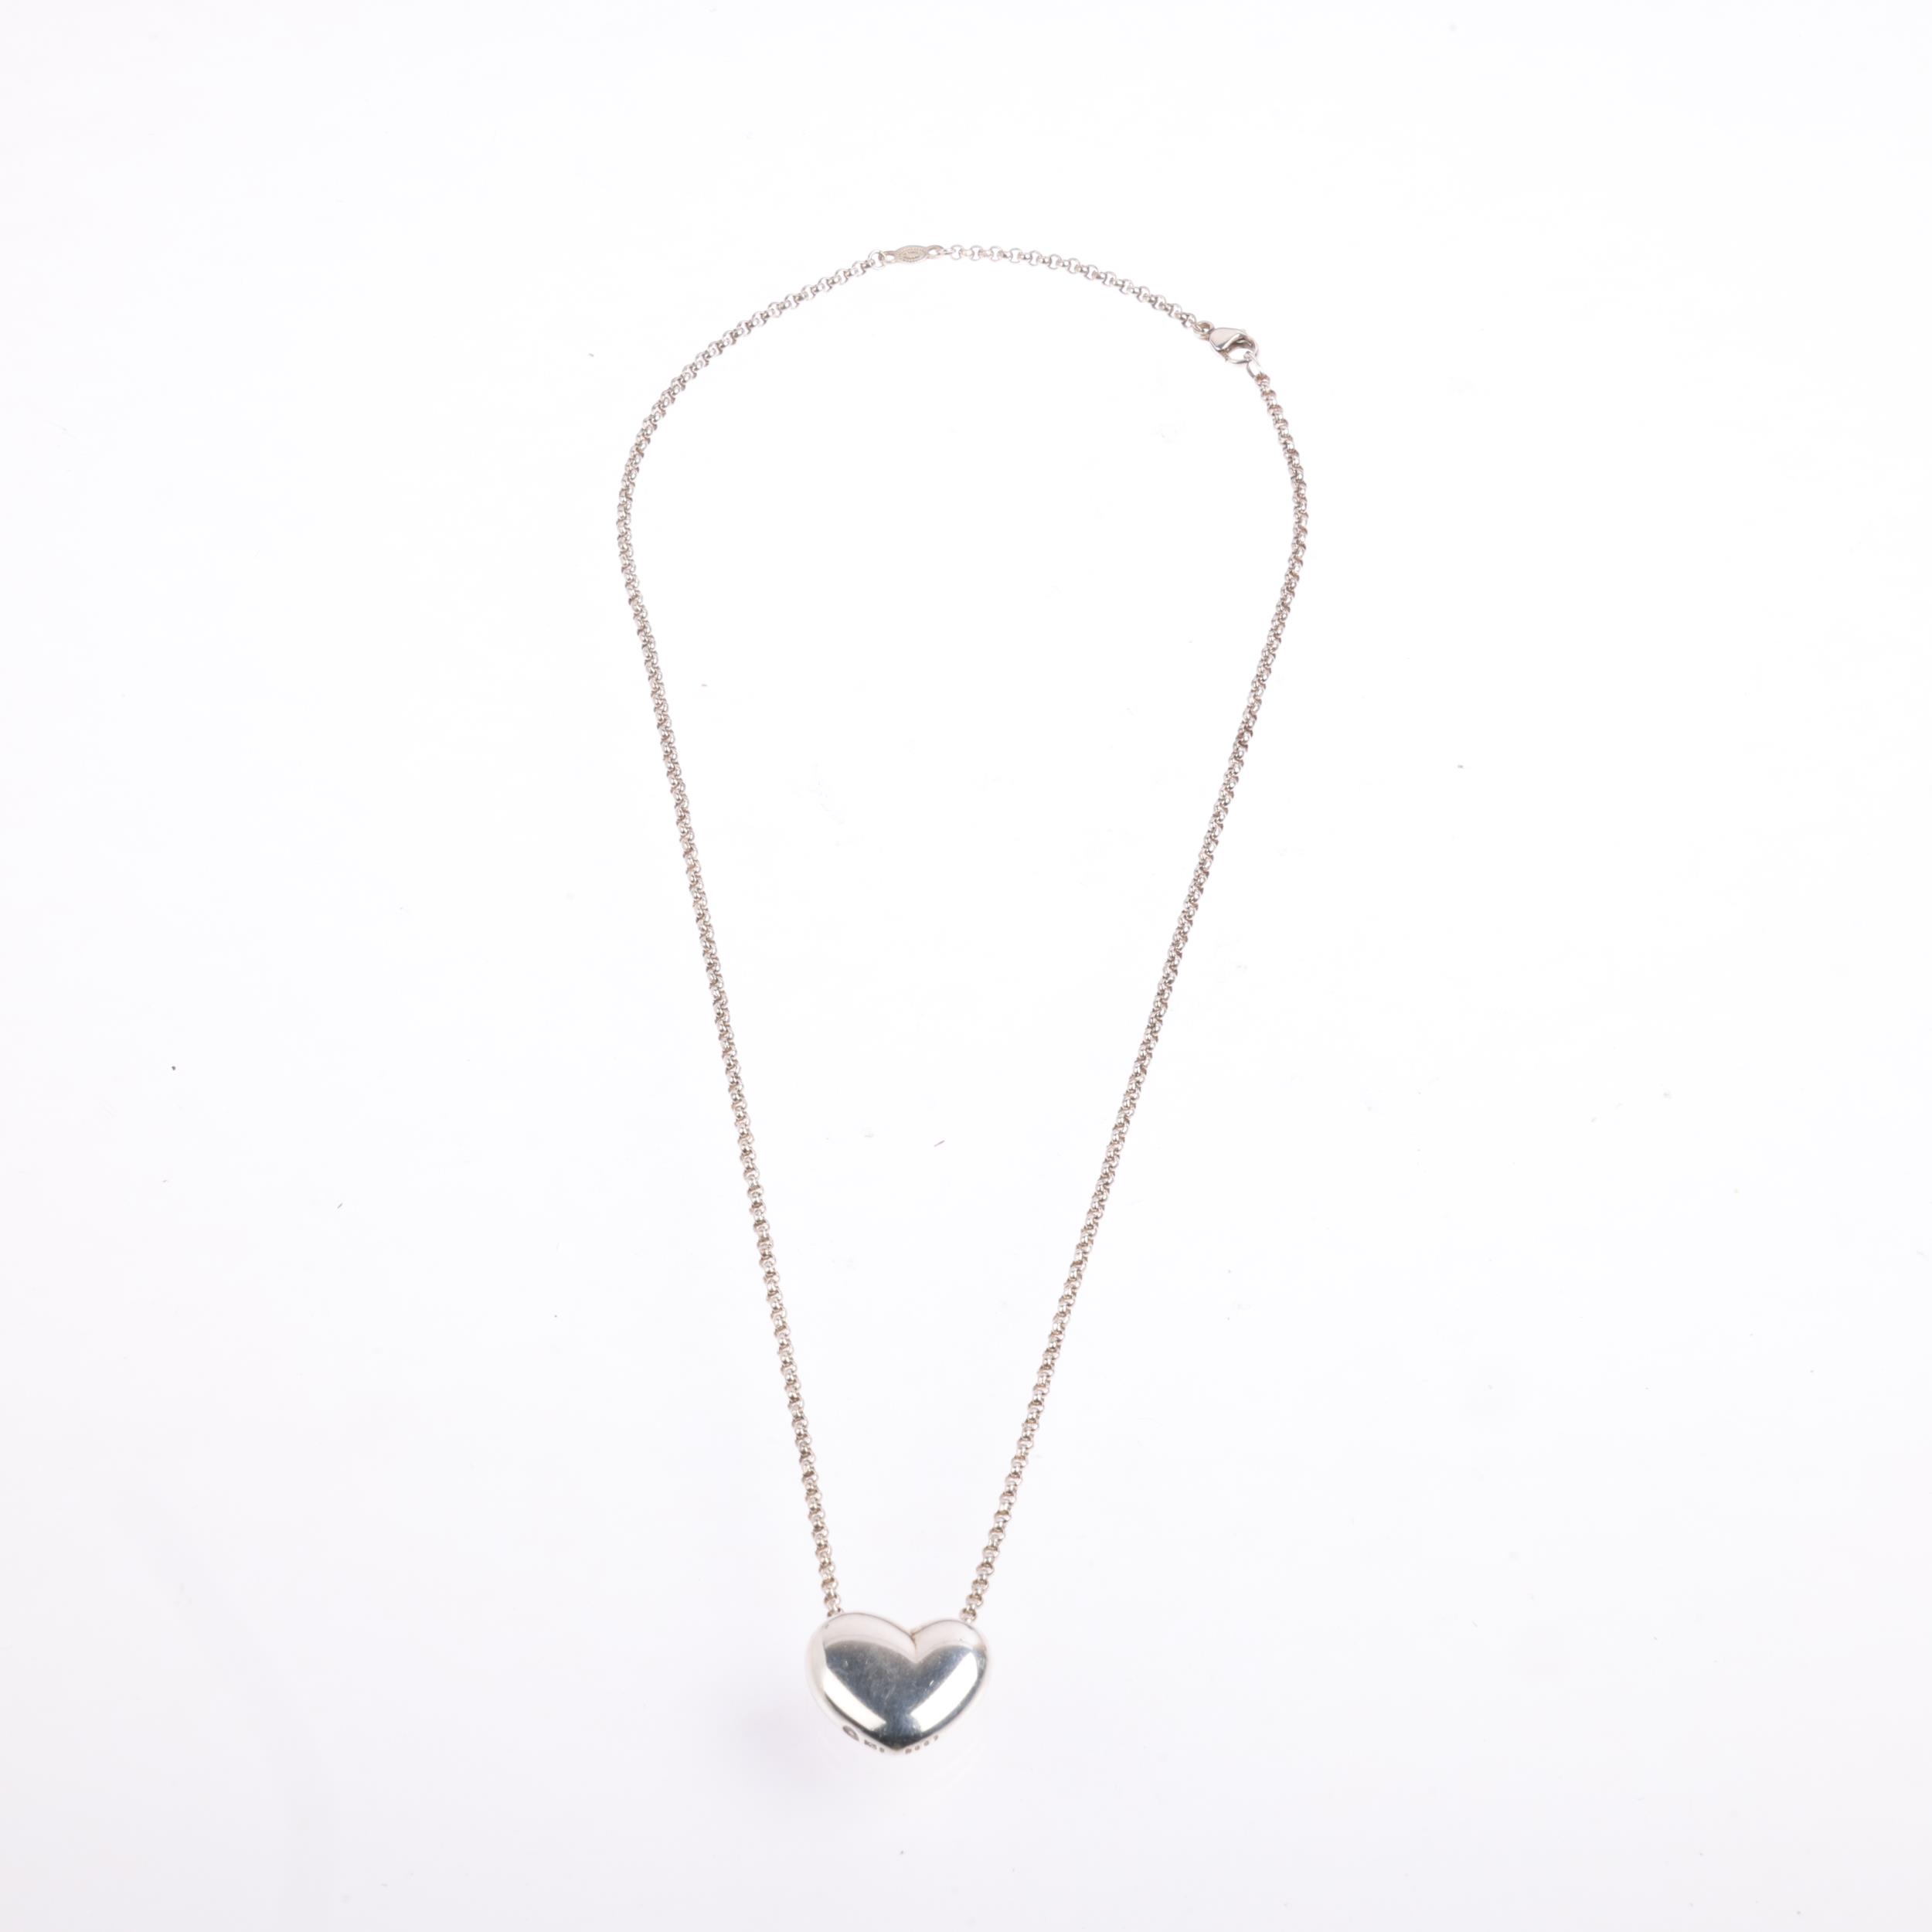 GEORG JENSEN - a Danish modernist sterling silver heart pendant necklace, designed by Regitze - Image 2 of 3